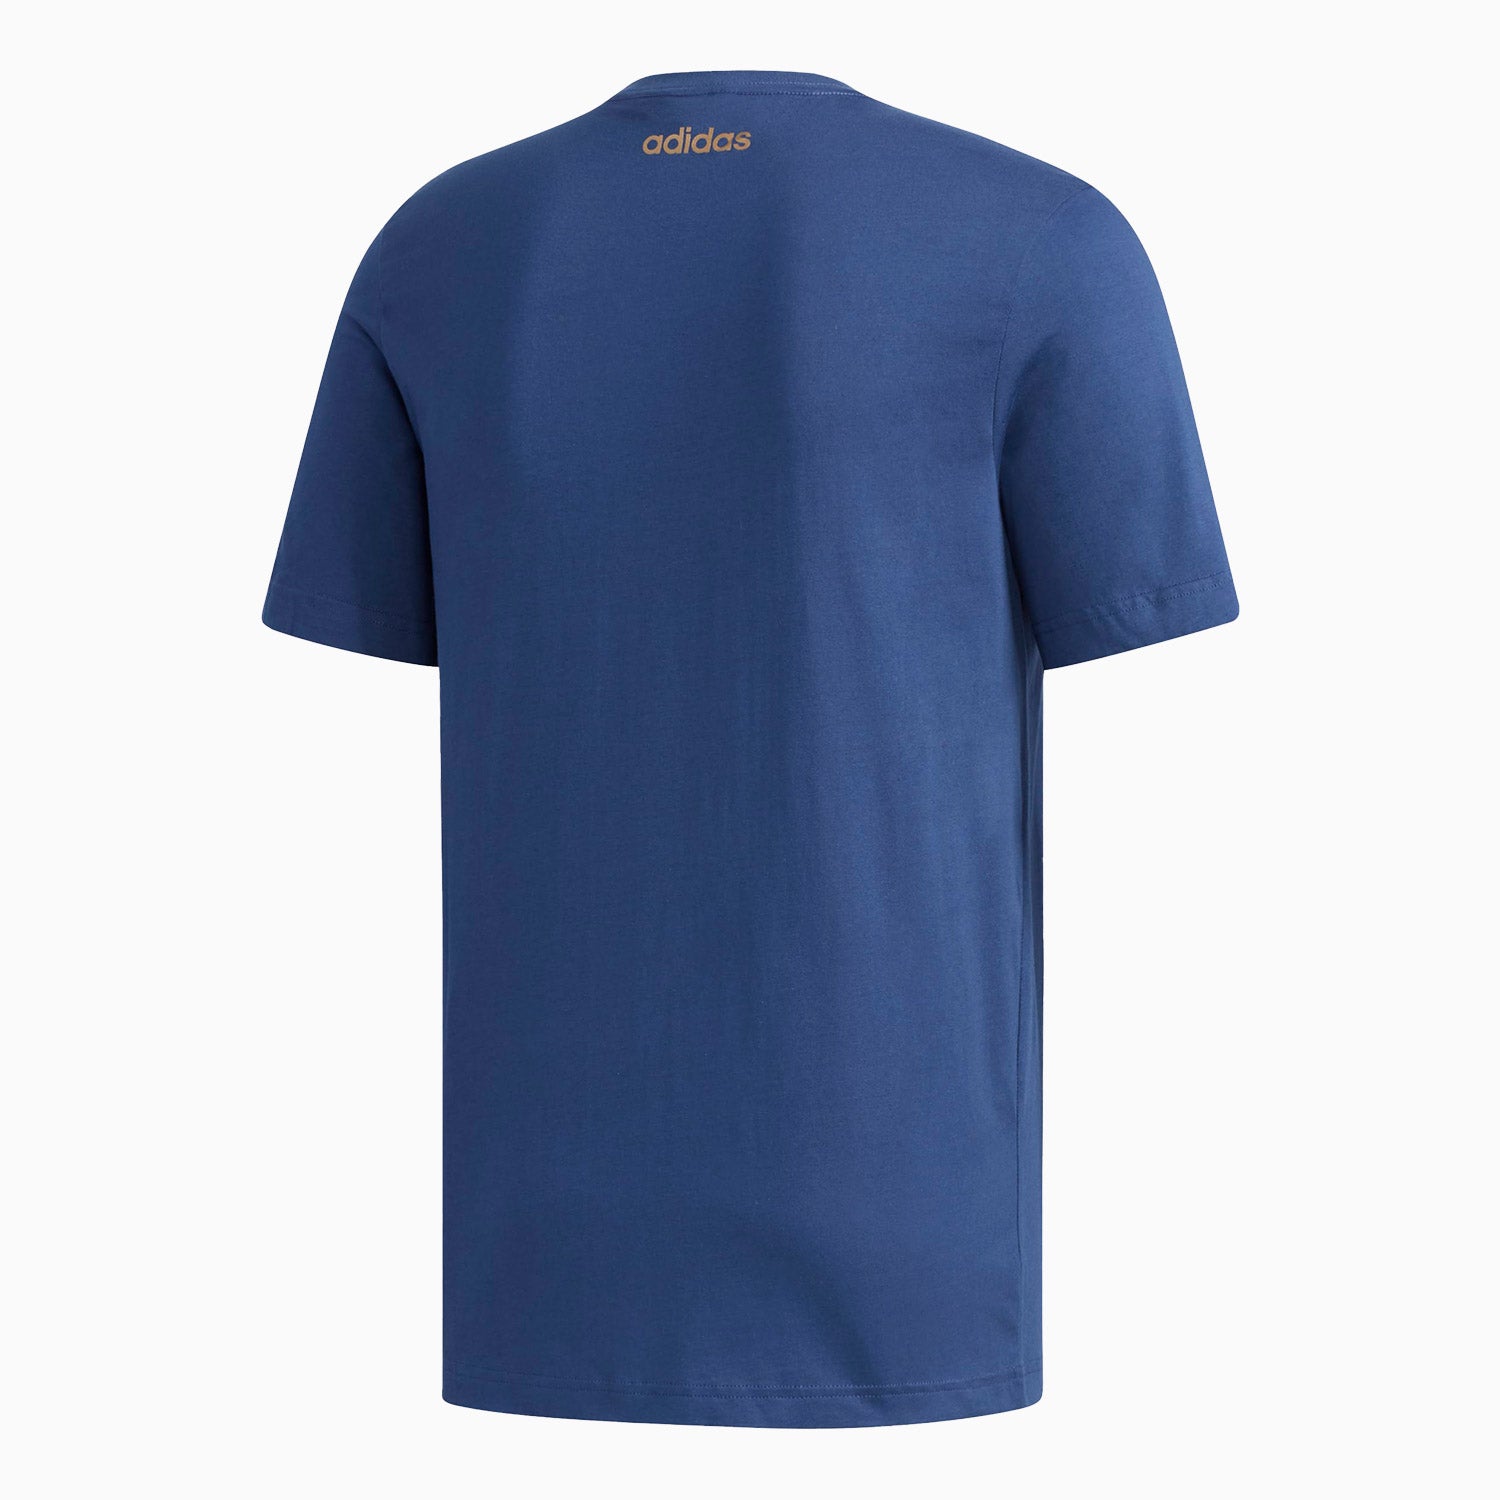 adidas-mens-essentials-crew-neck-t-shirt-fm3442